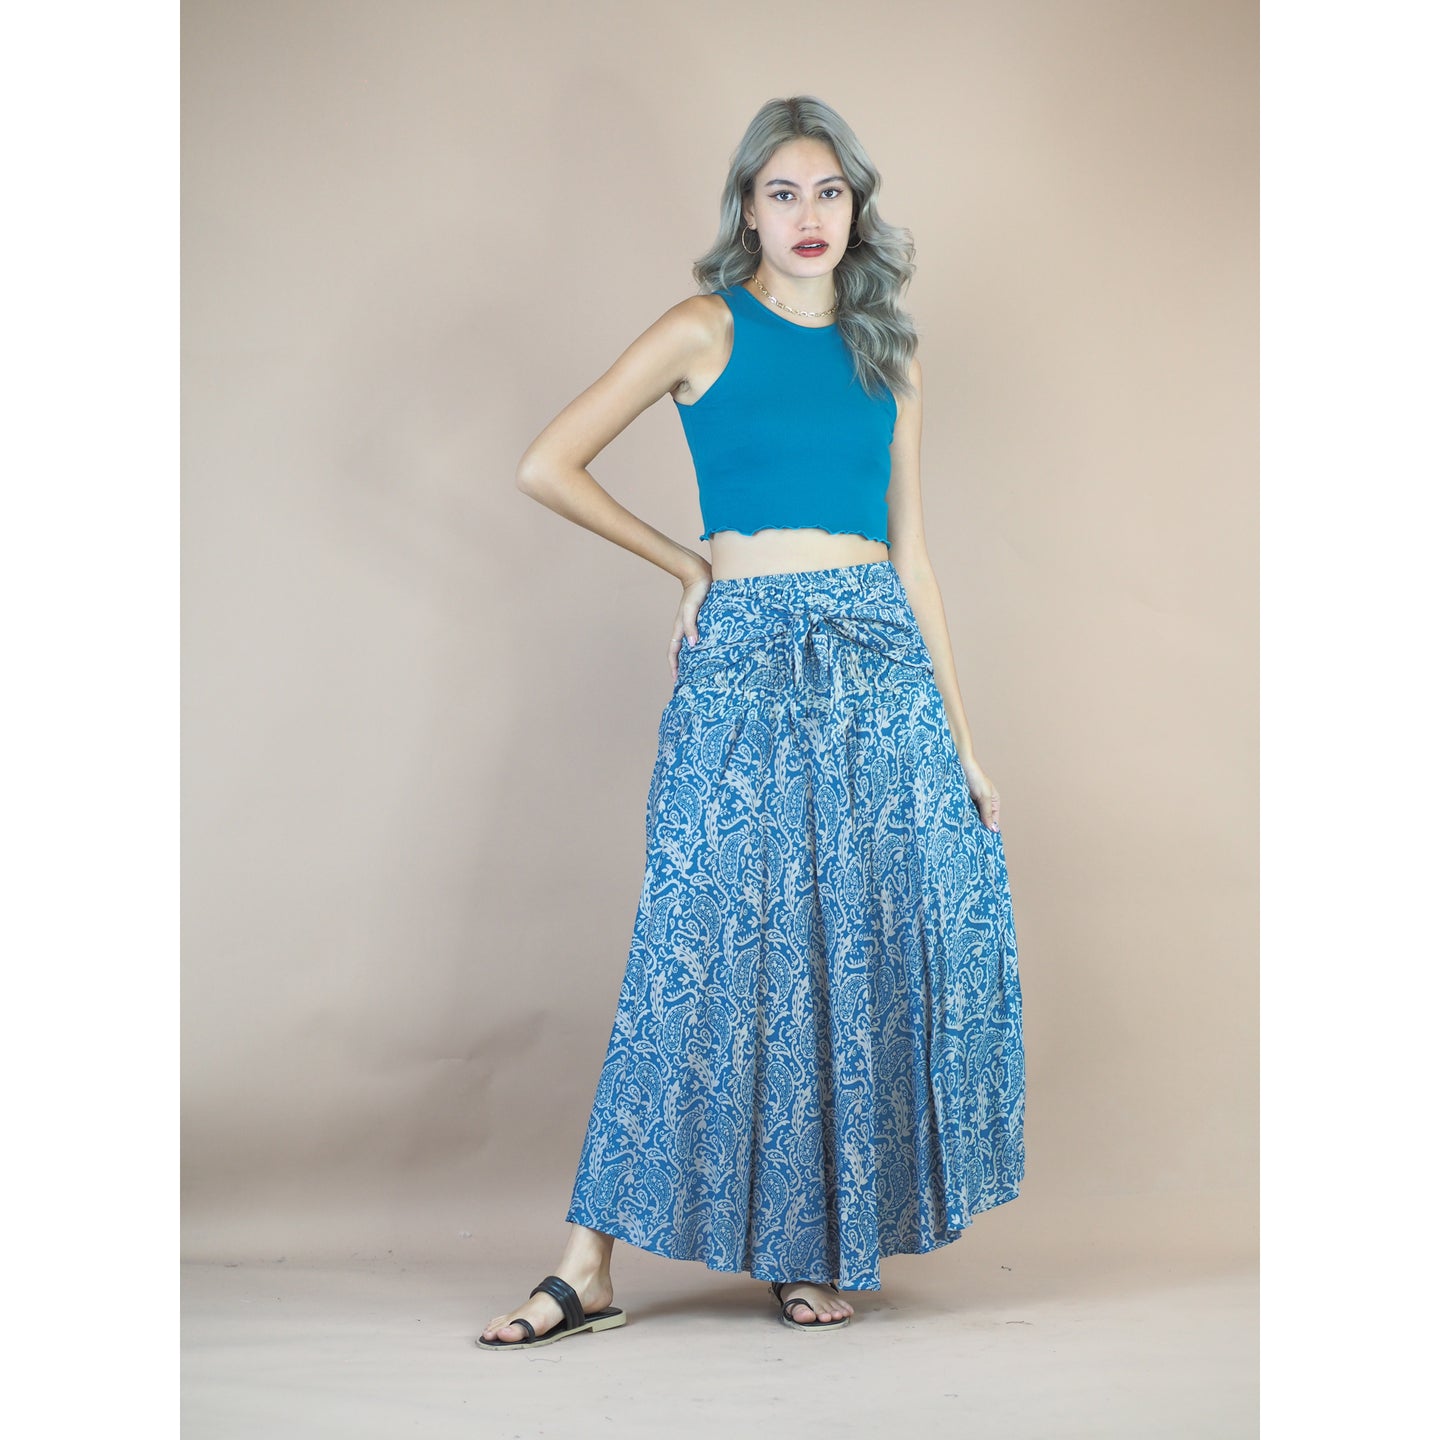 Flowers Women's Bohemian Skirt in Blue SK0033 020150 01